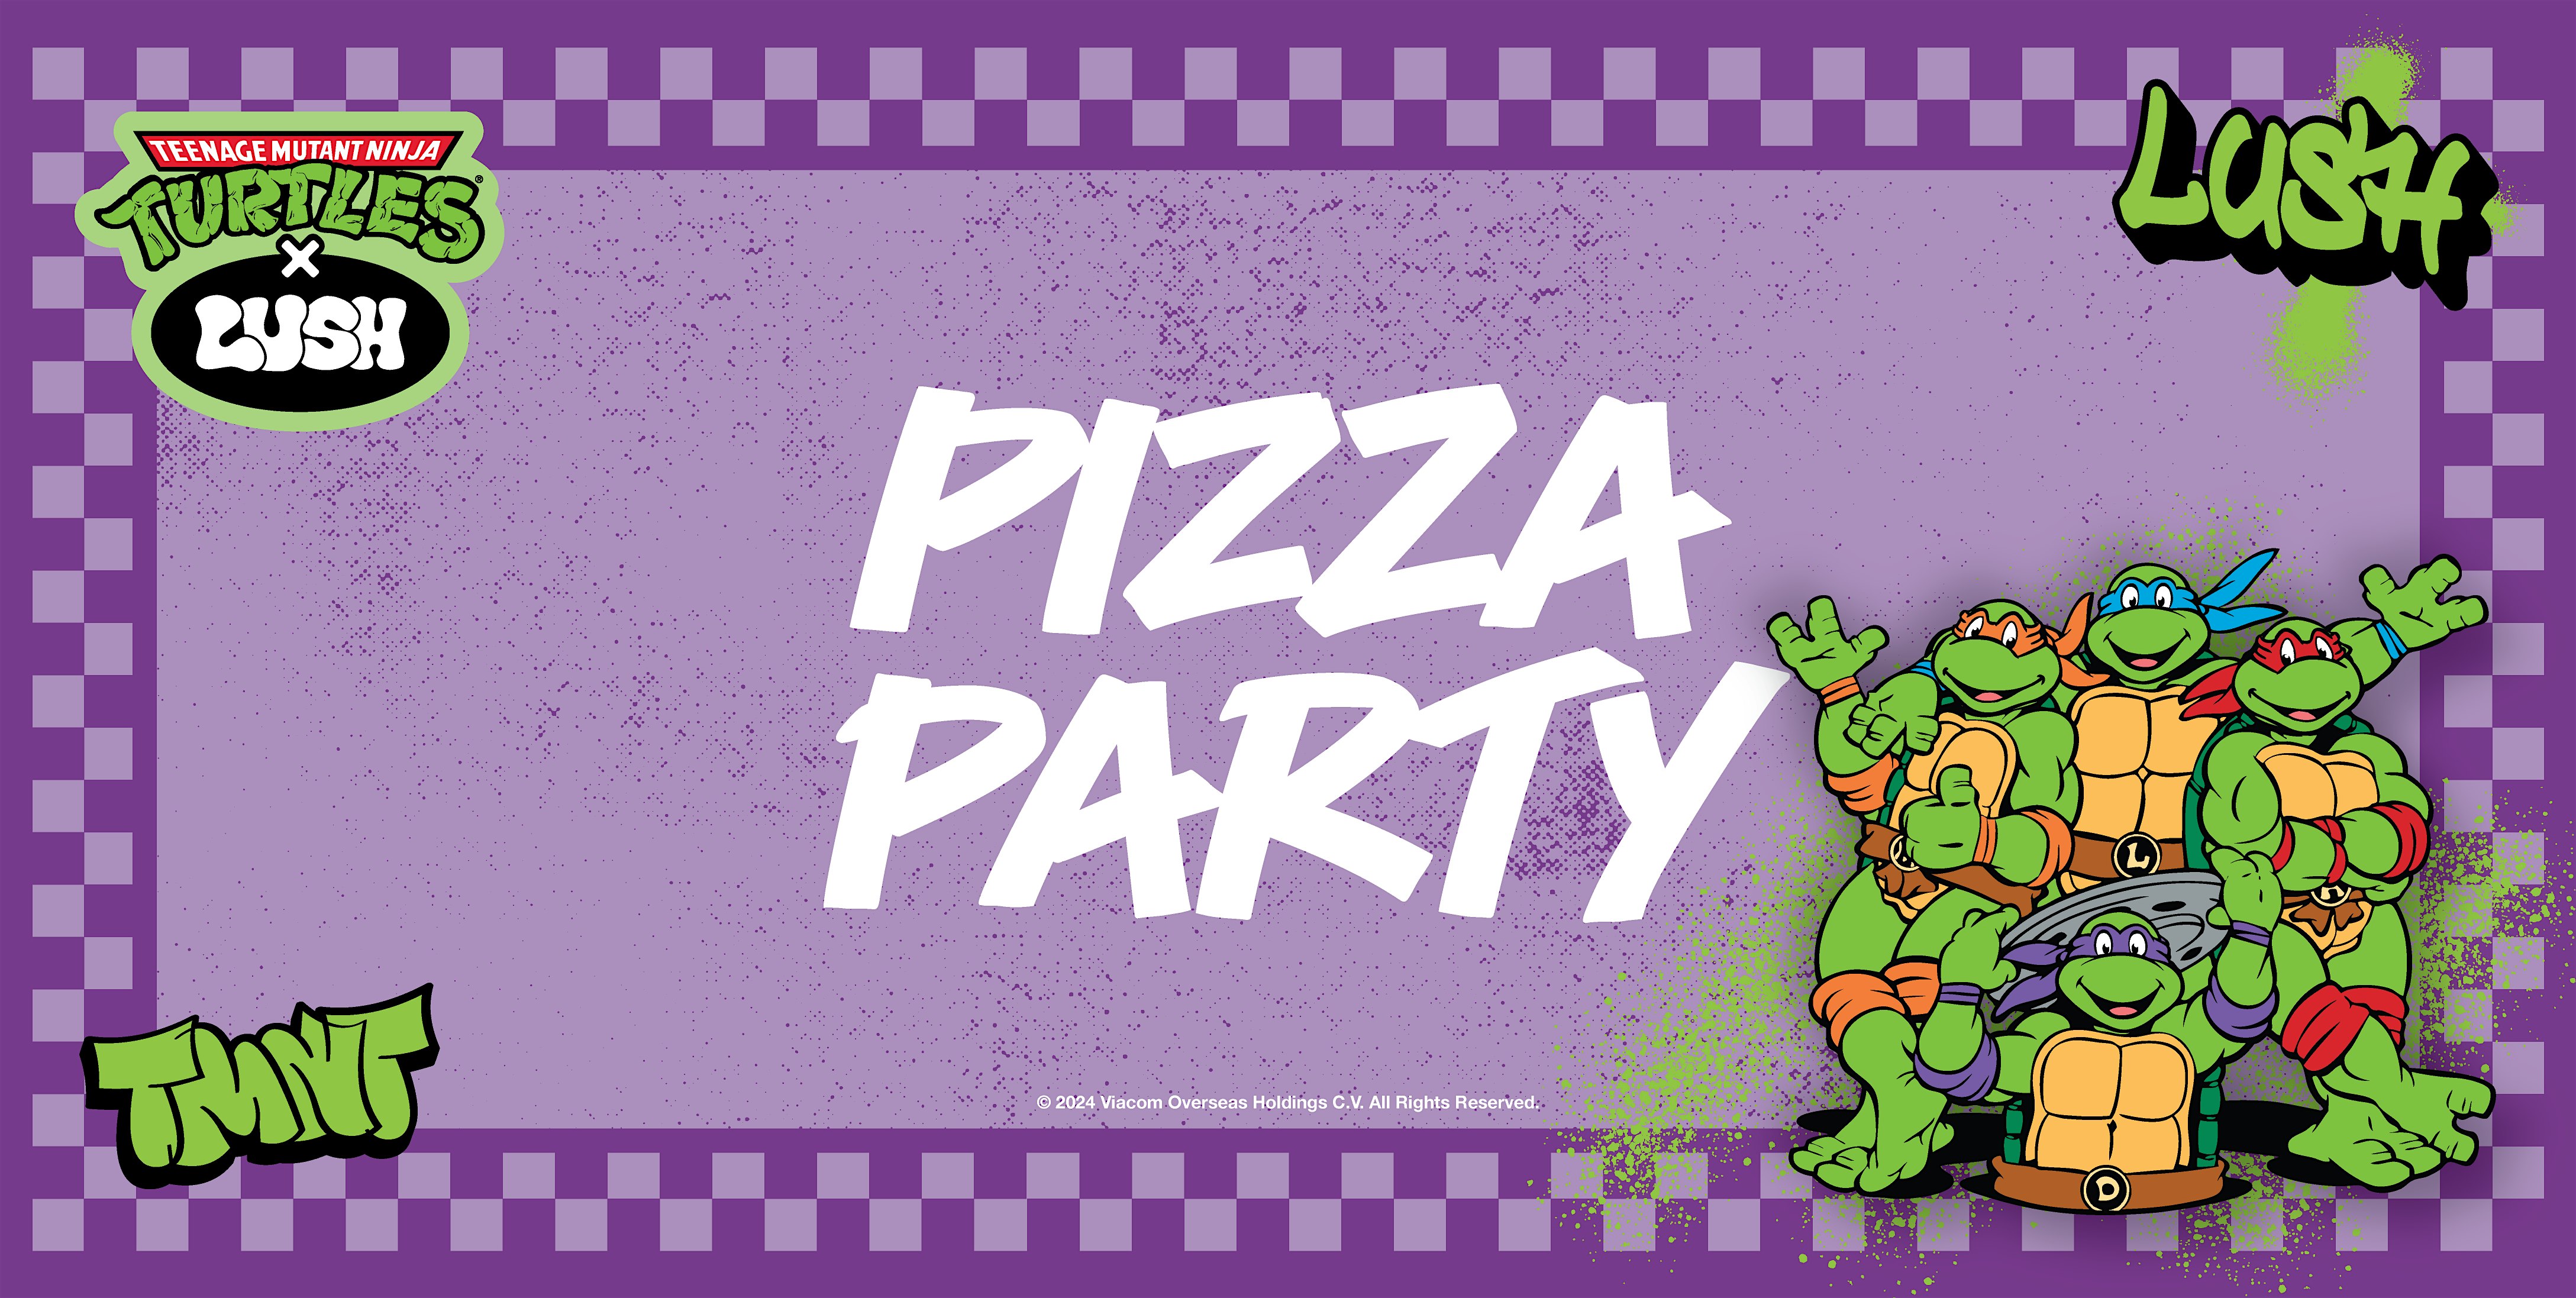 LUSH Aberdeen X TMNT Pizza Party - Deep Pan